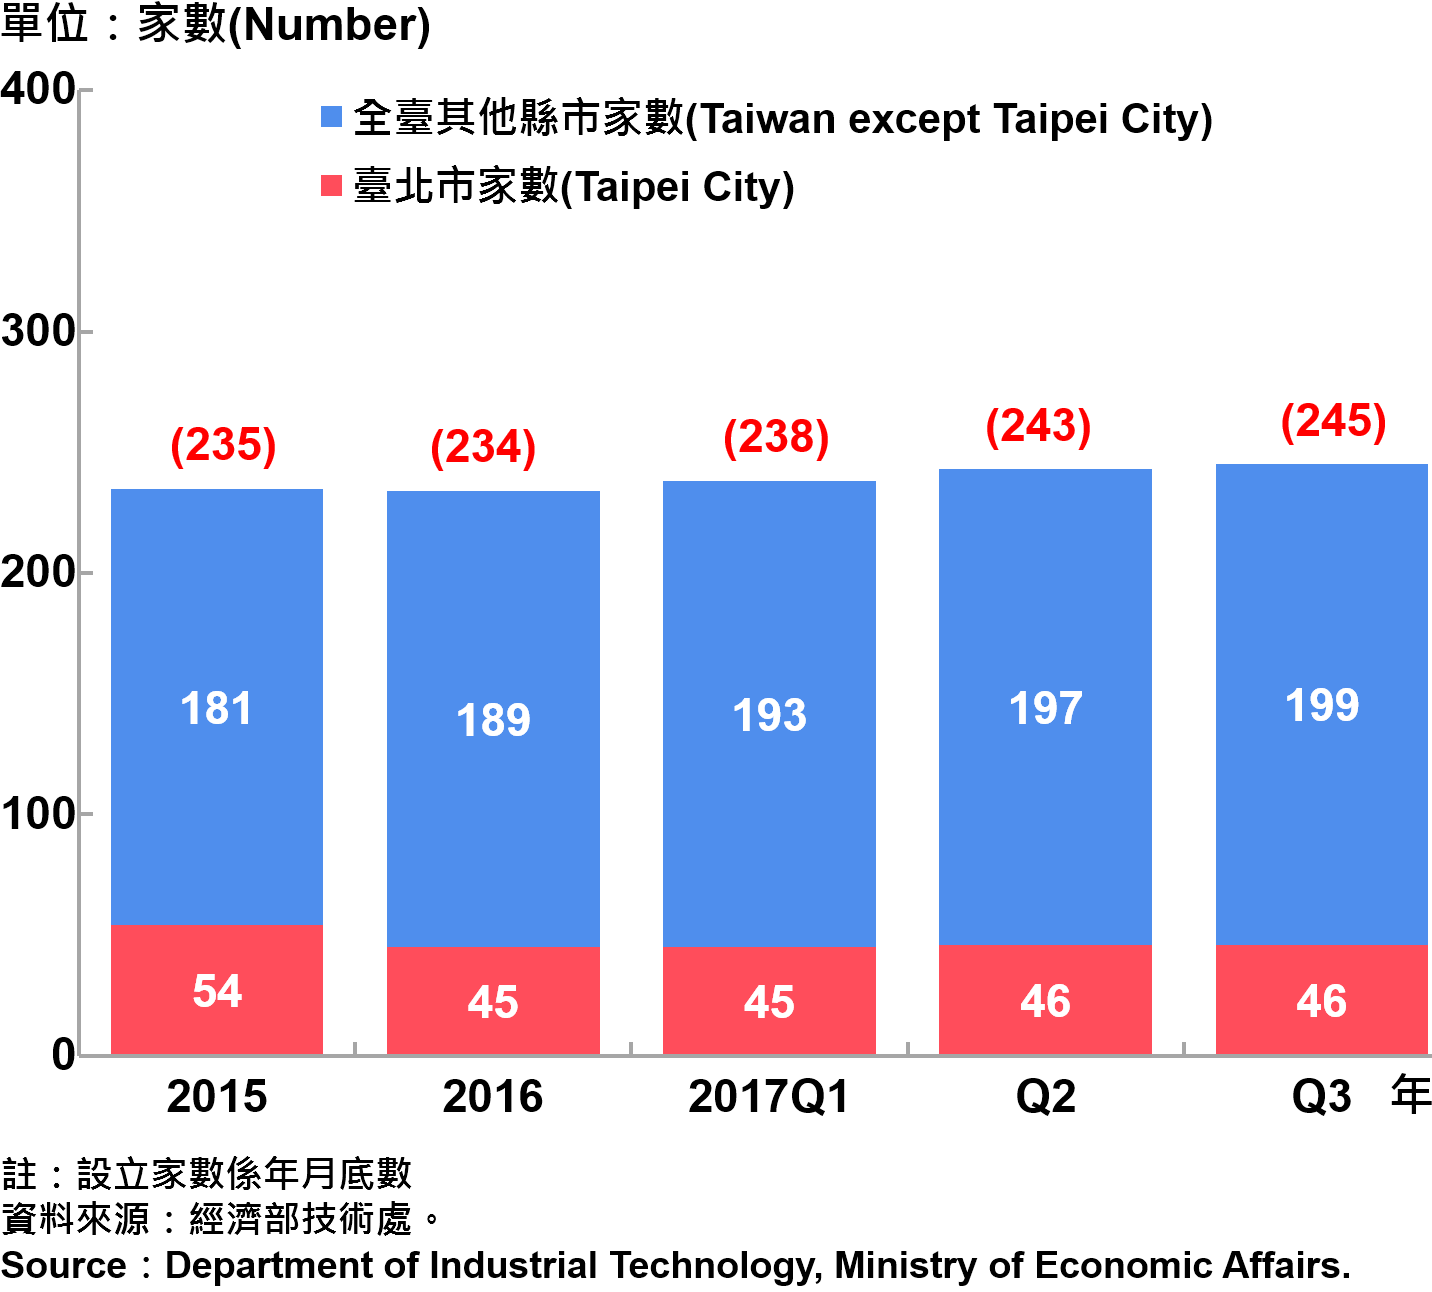 圖16、臺北市研發中心設立家數—2017Q3 Number of R&D Centers in Taipei City—2017Q3